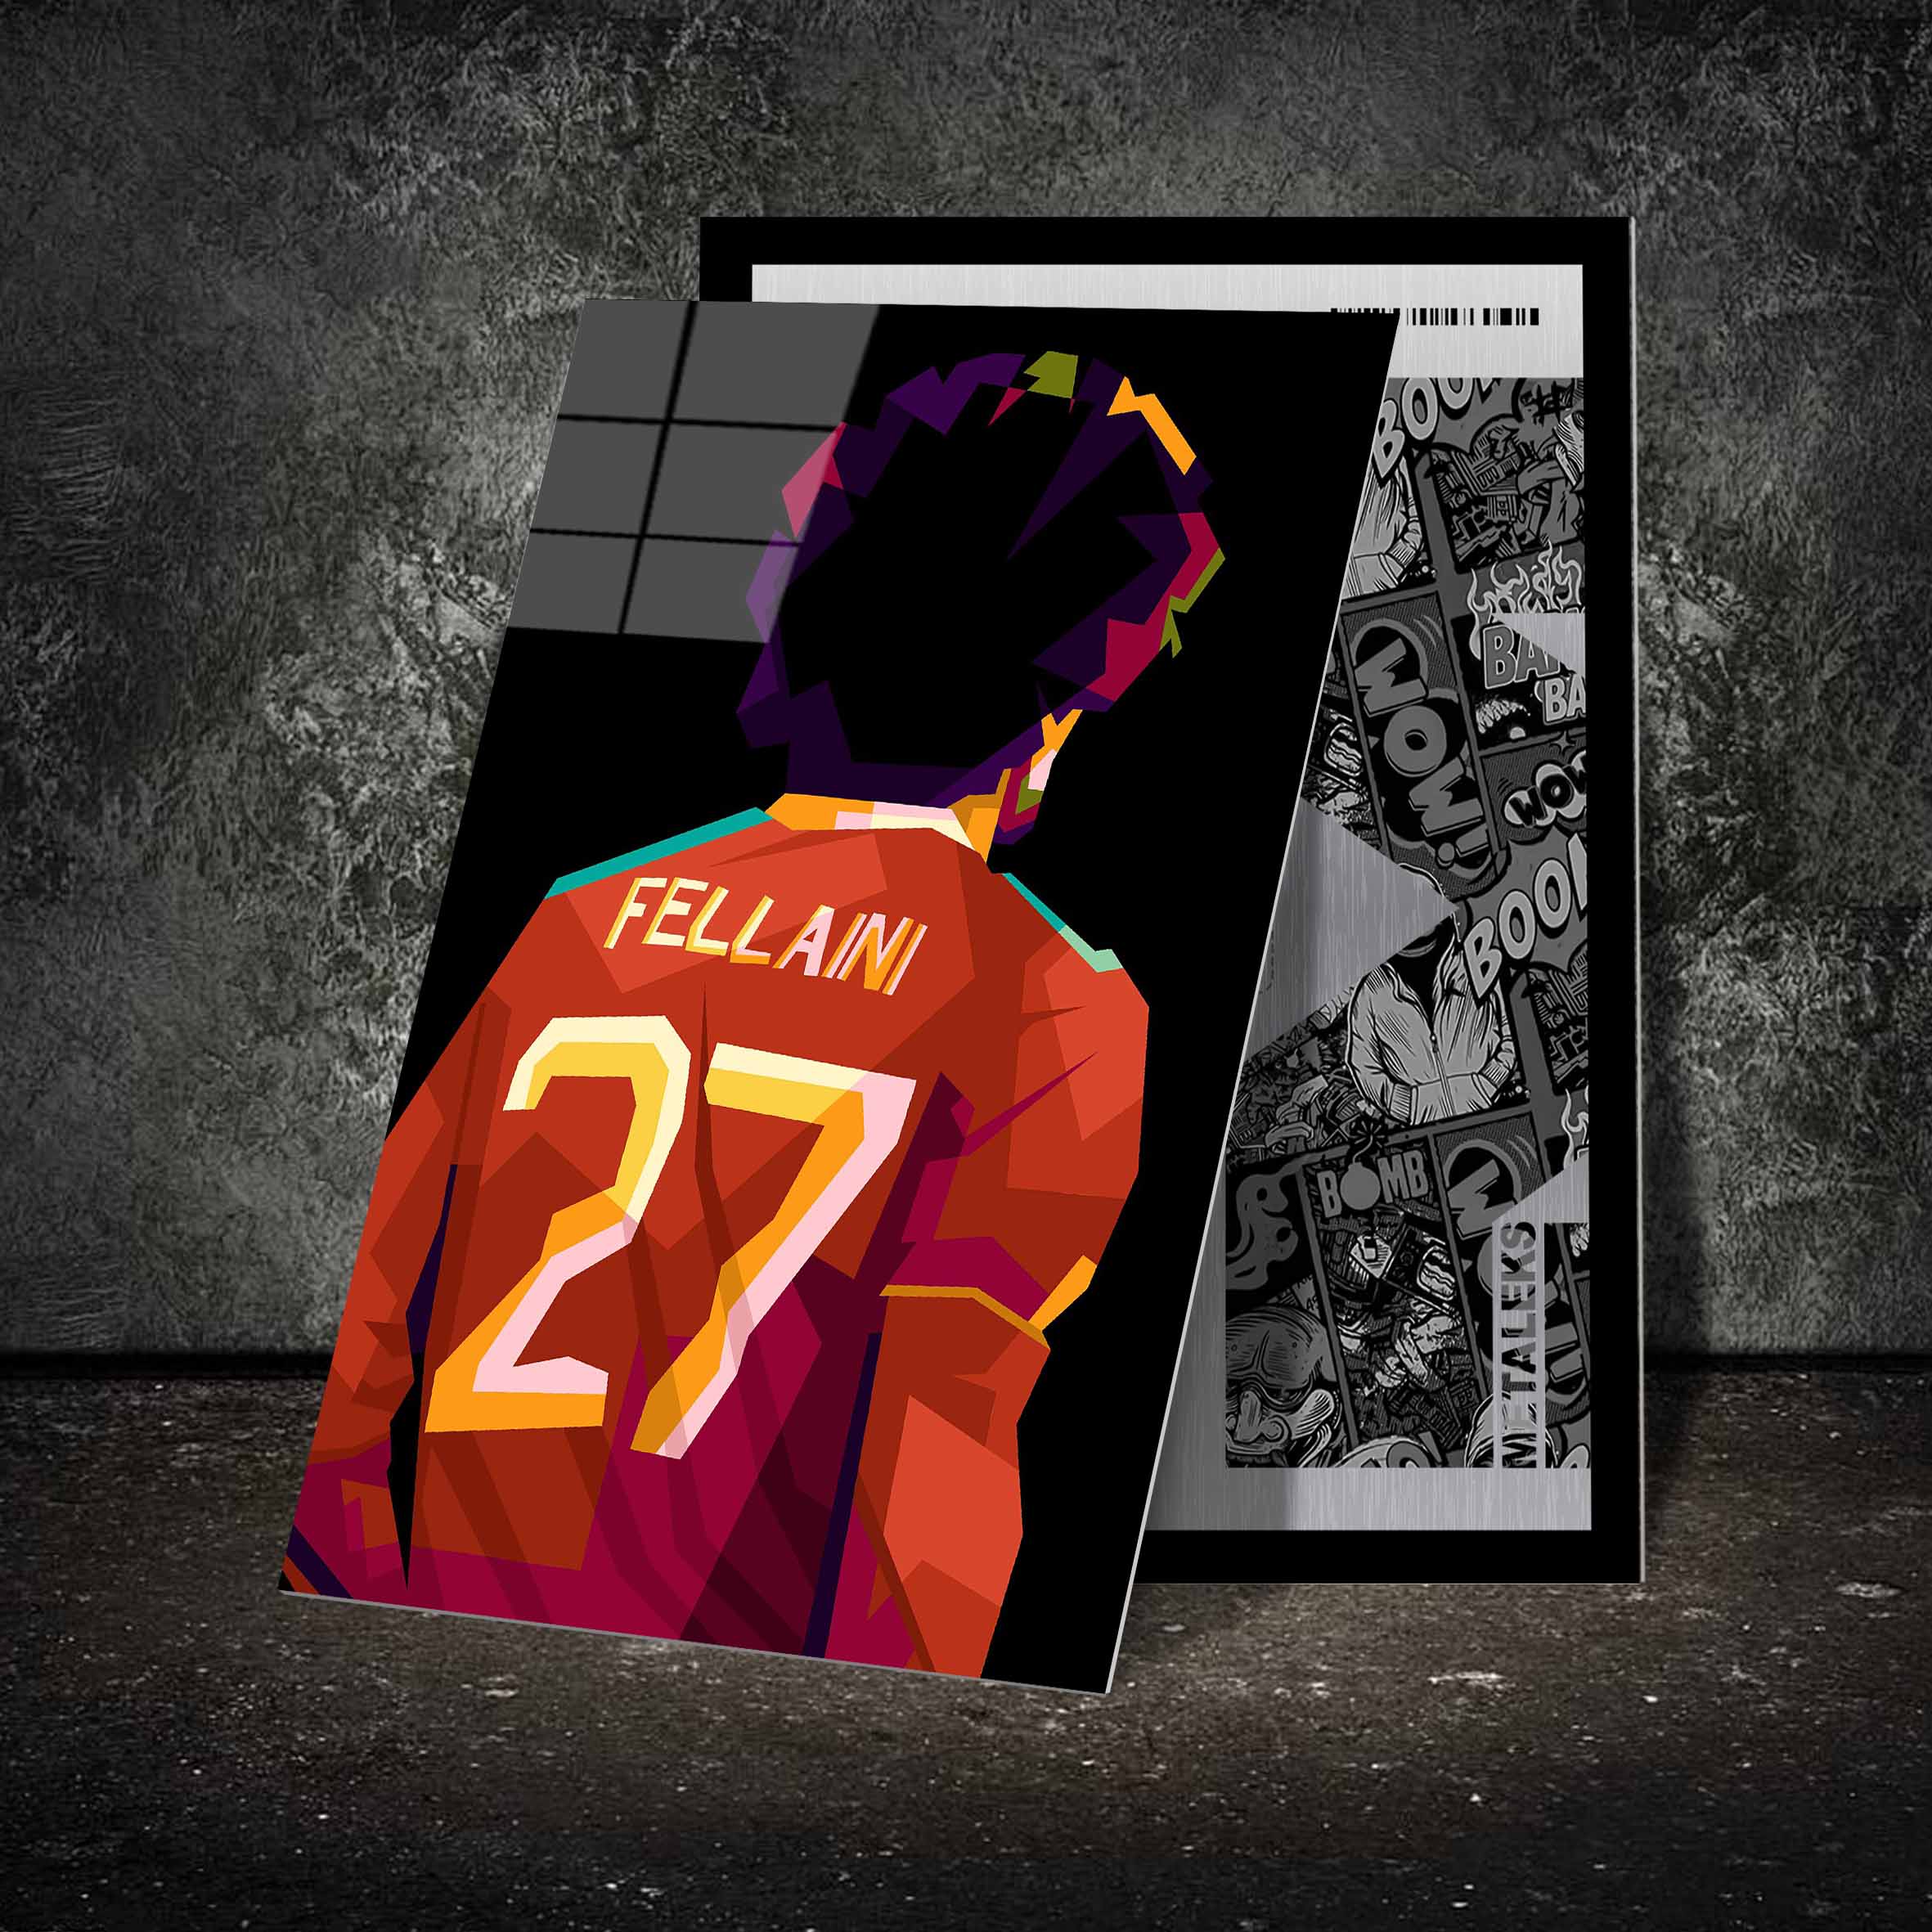 Legend football Fellaini in pop art -Artwork by @Amirudin kosong enam